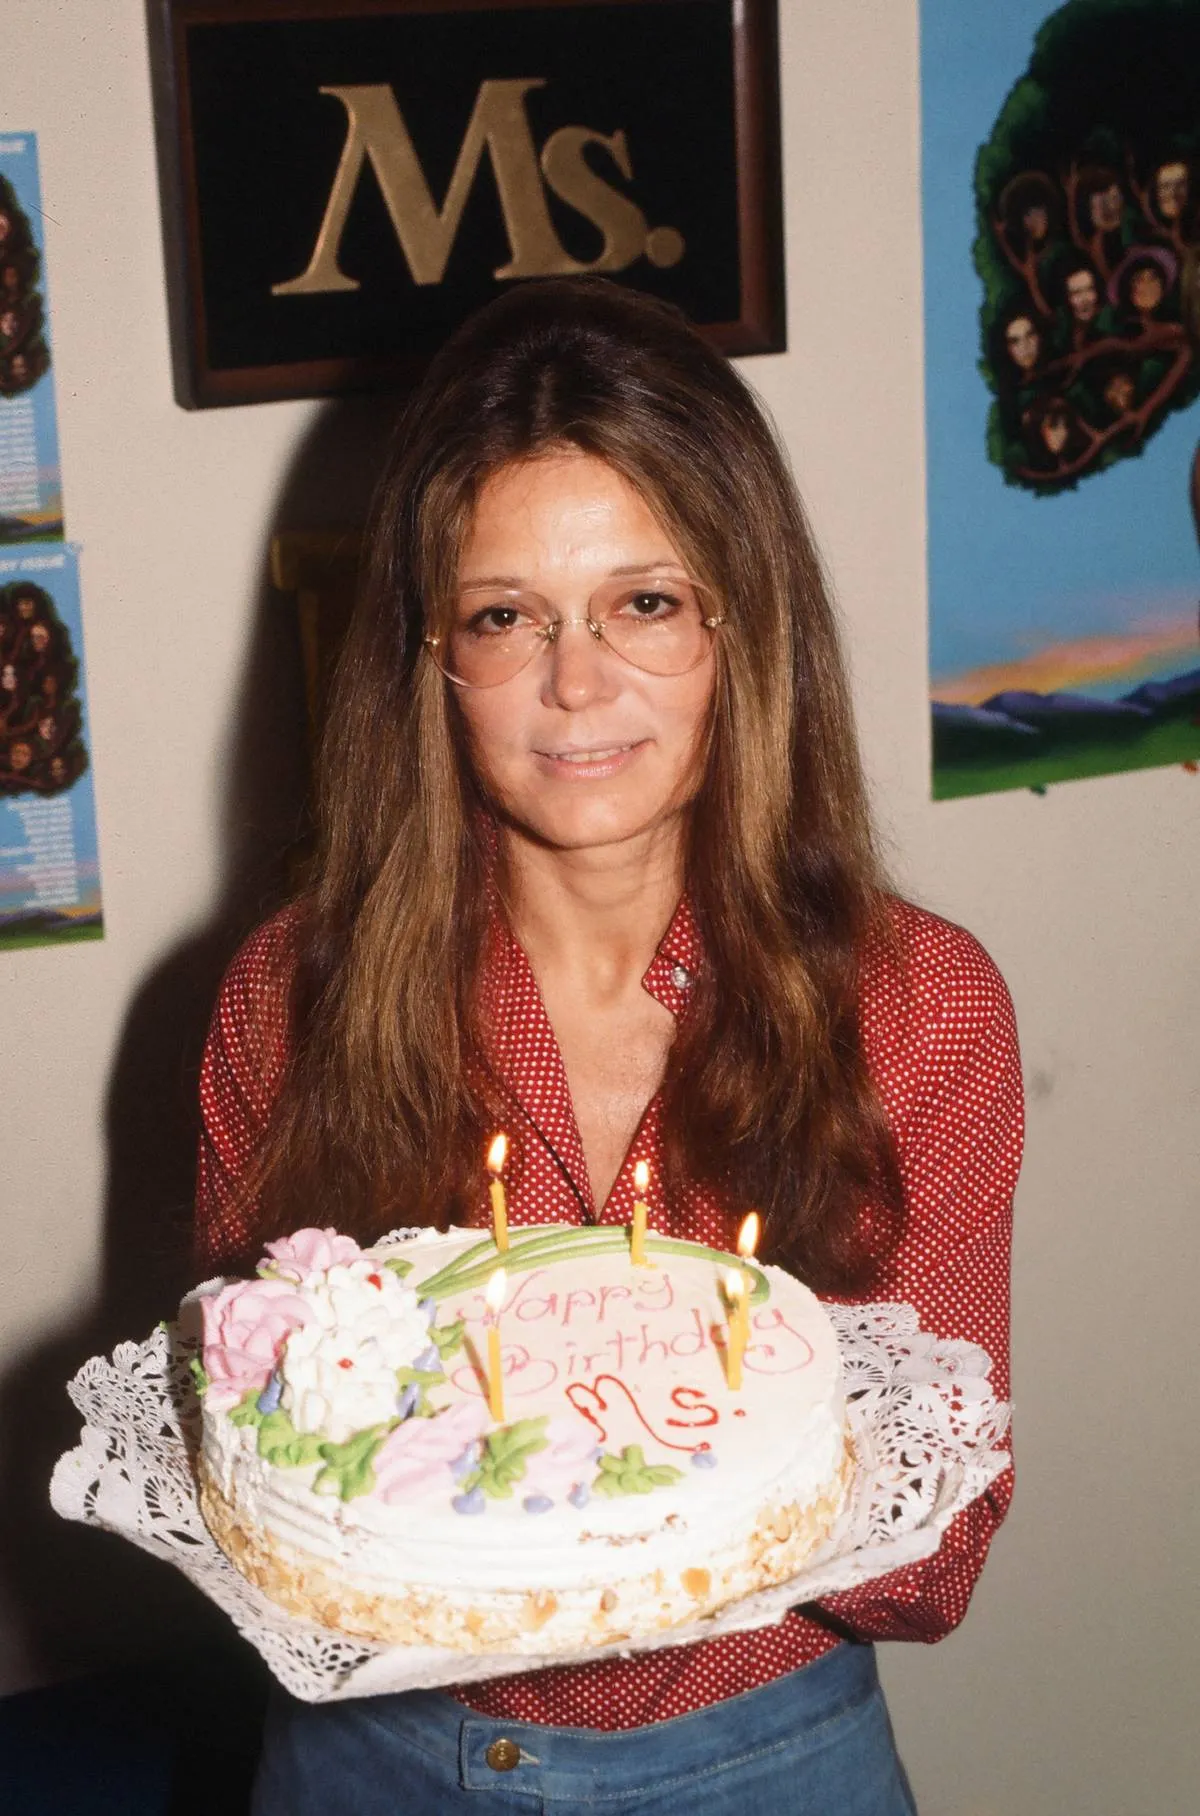 Gloira Steinem At Ms Birthday